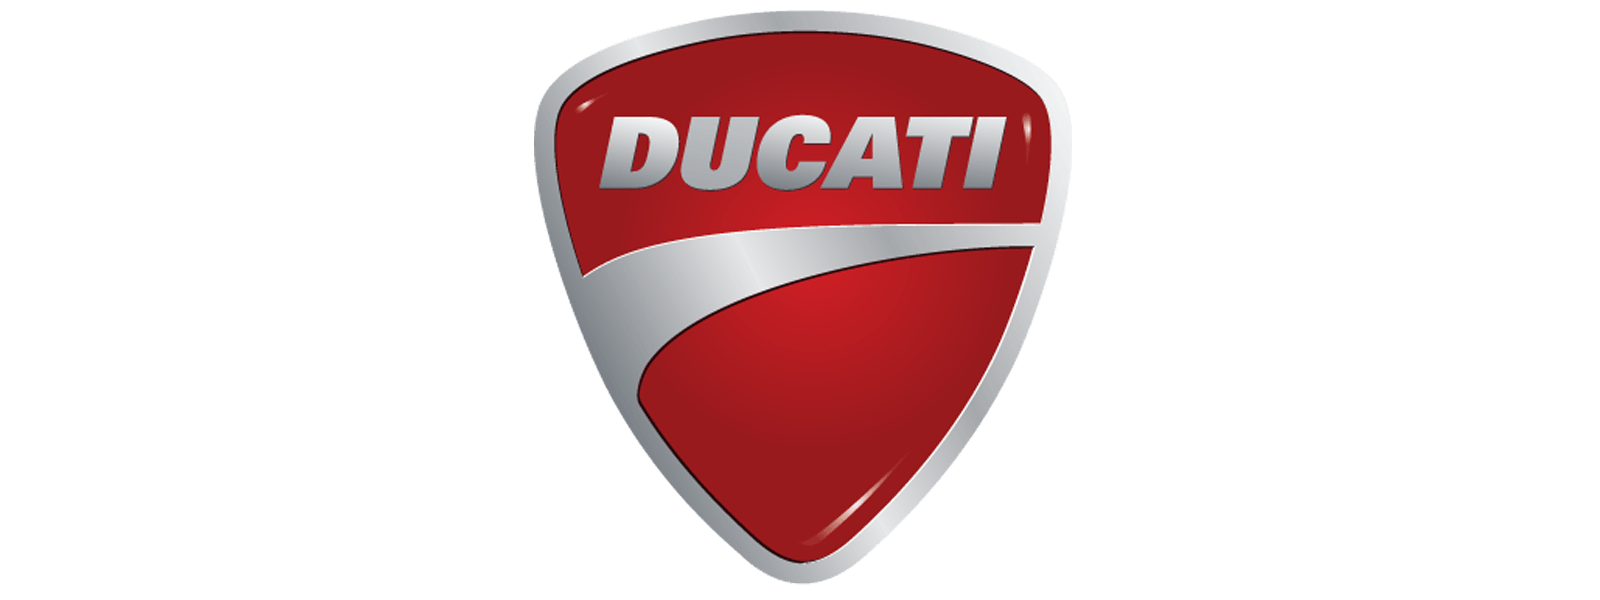 Ducati Car Logo - Ducati Logo | Motorcycle brands: logo, specs, history.